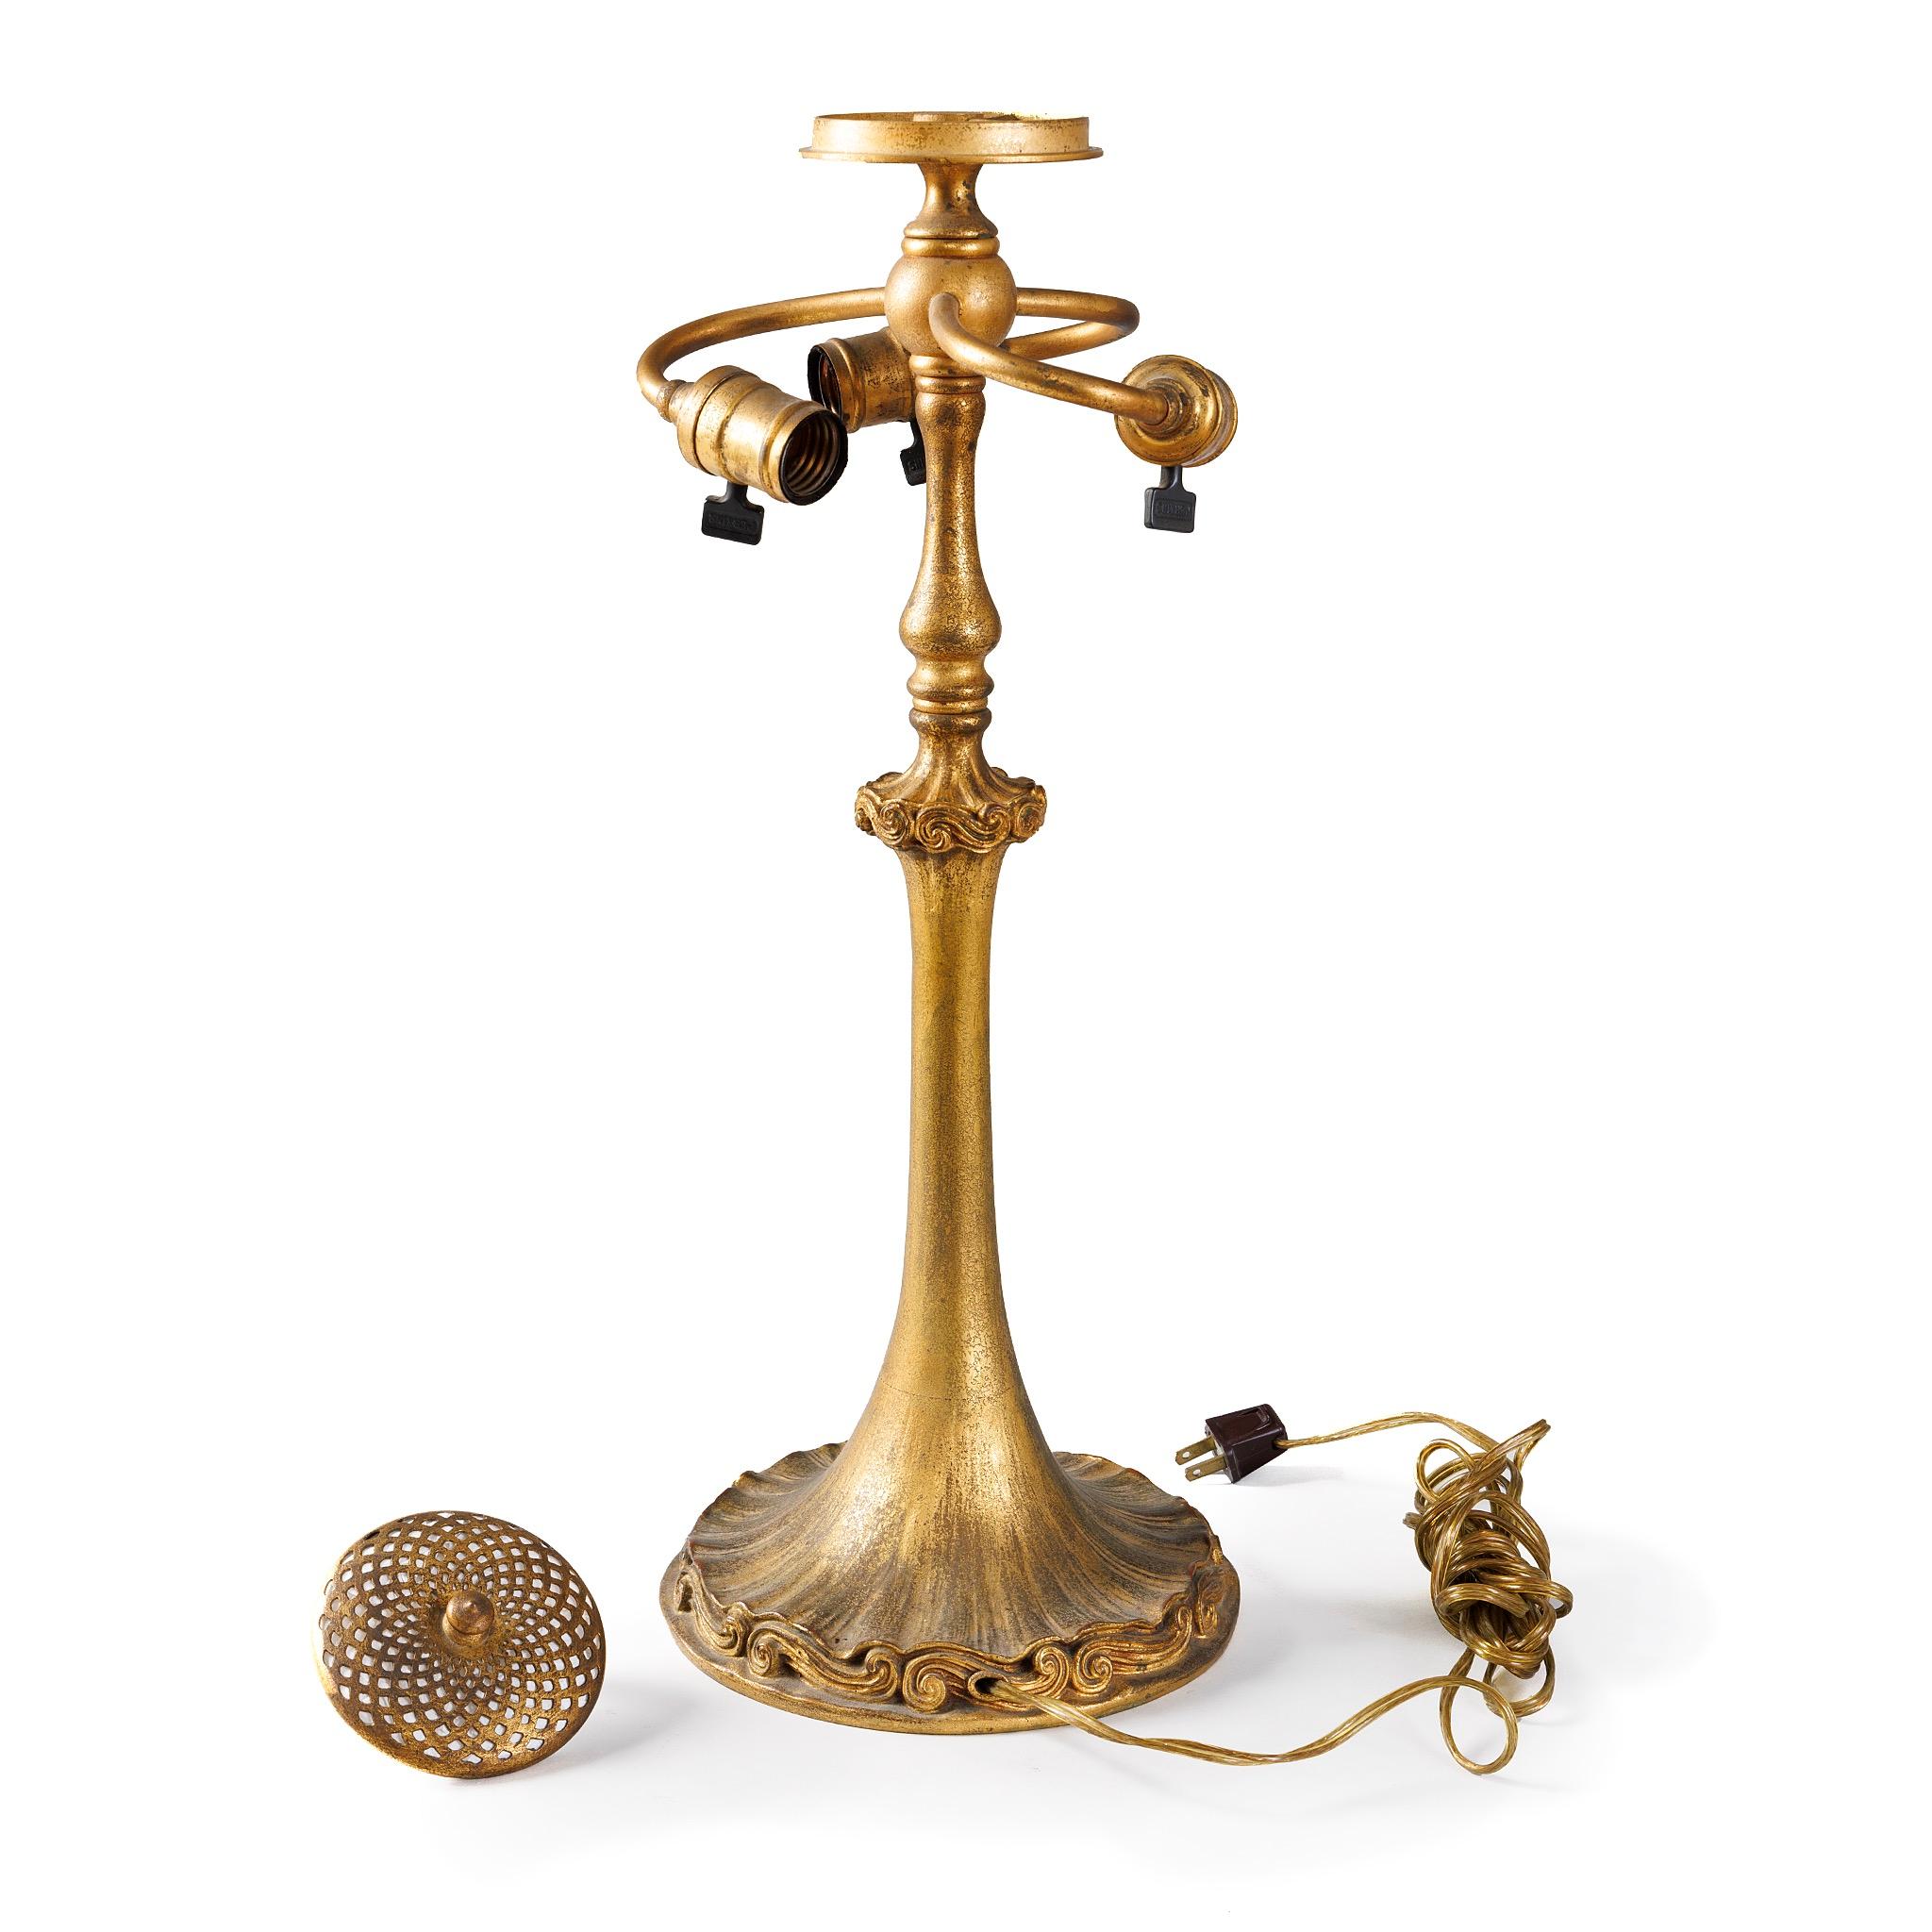 Art Nouveau Tiffany Studios New York “Dragonfly” Table Lamp